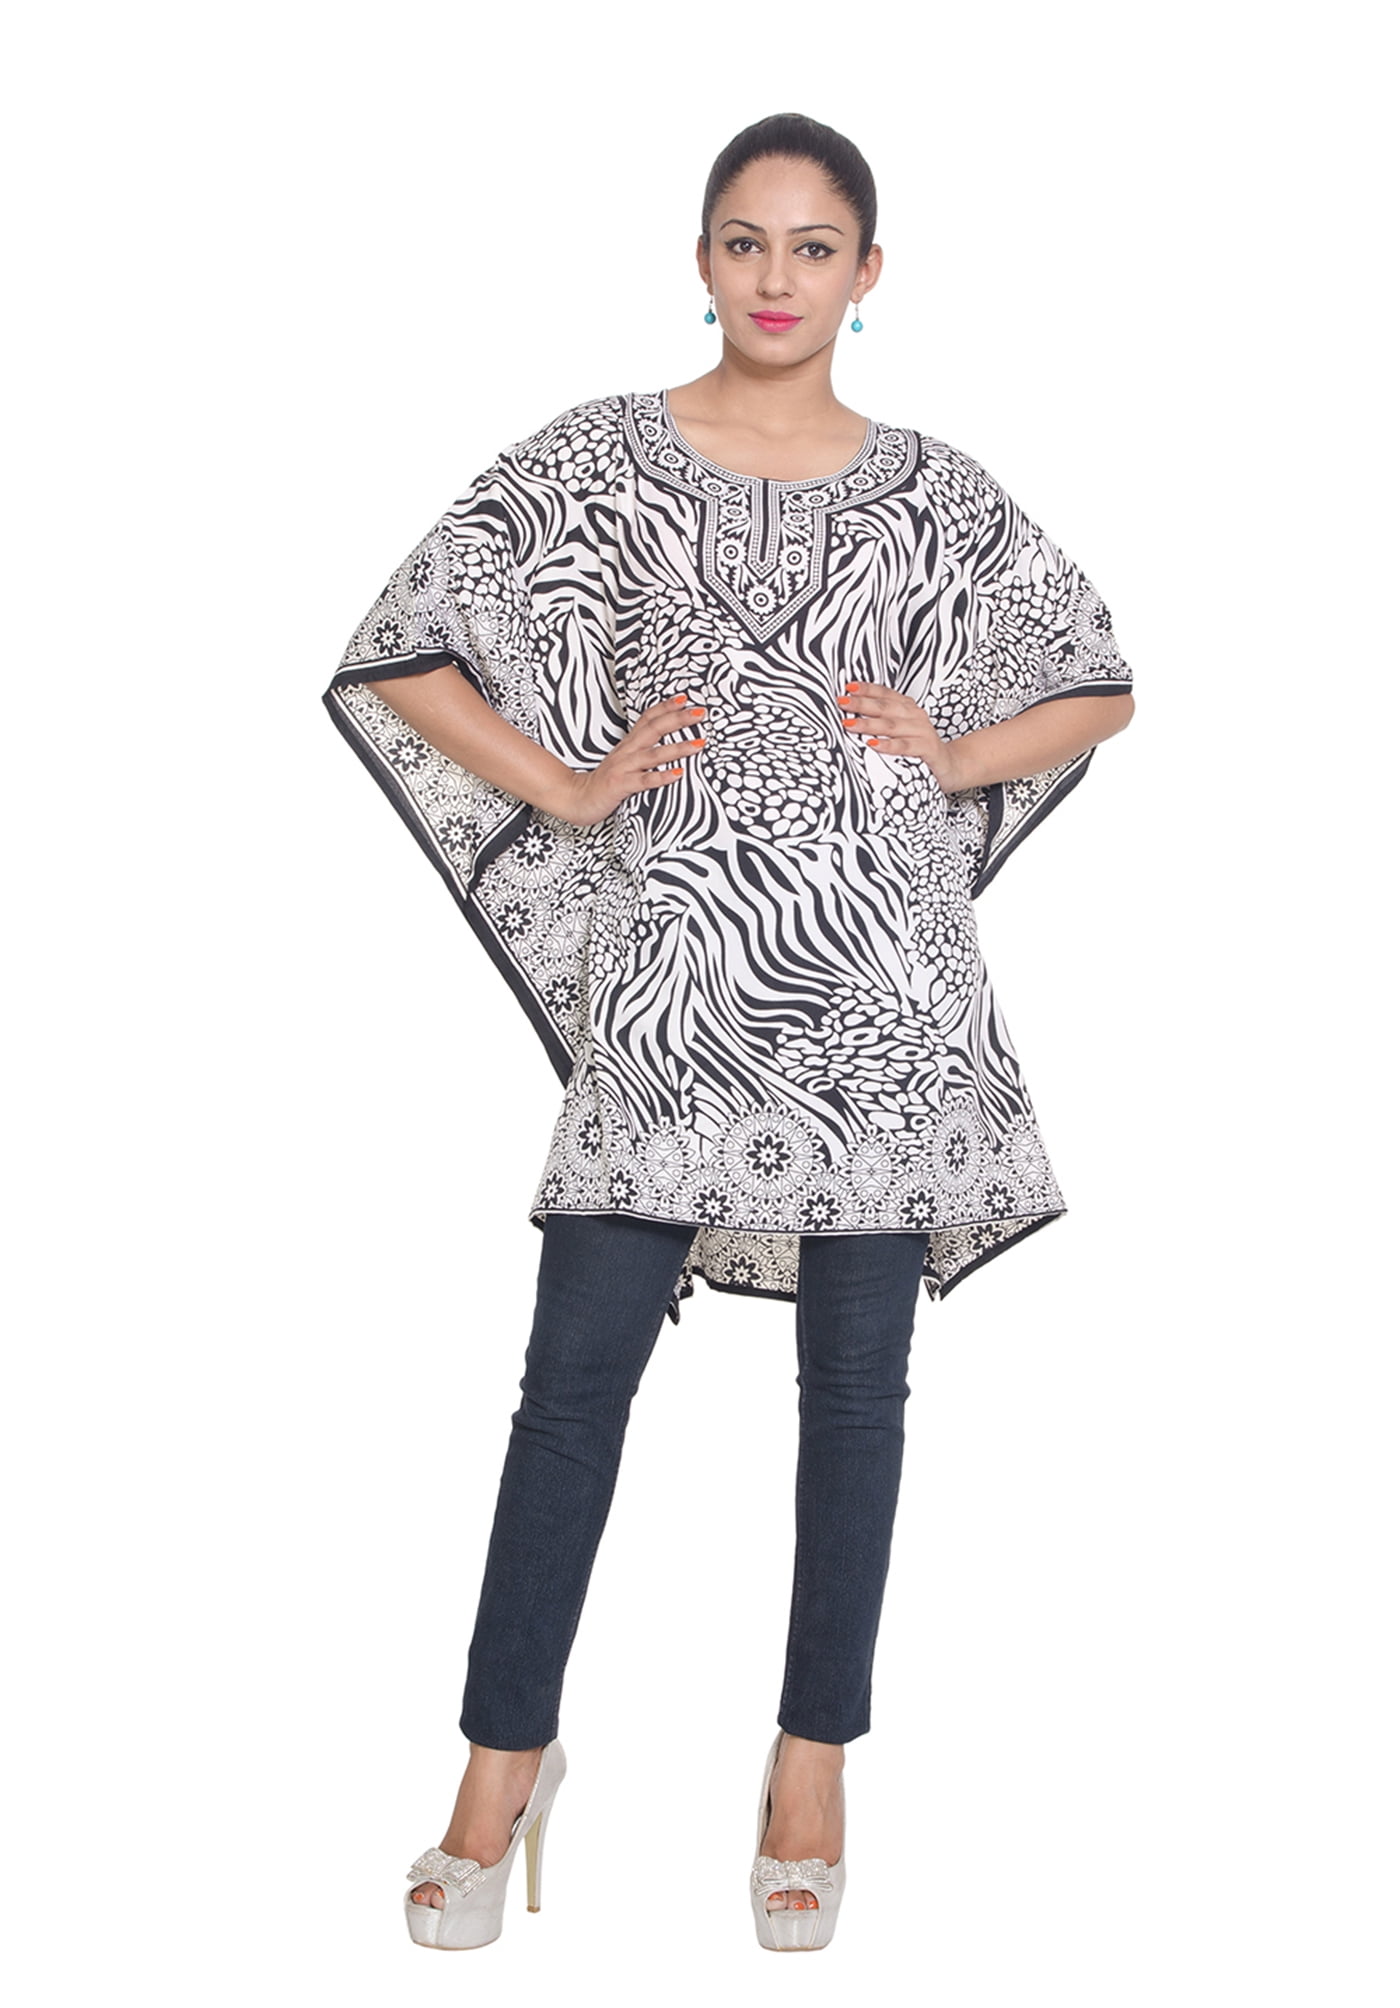 Buy > black and white kaftan dress > in stock